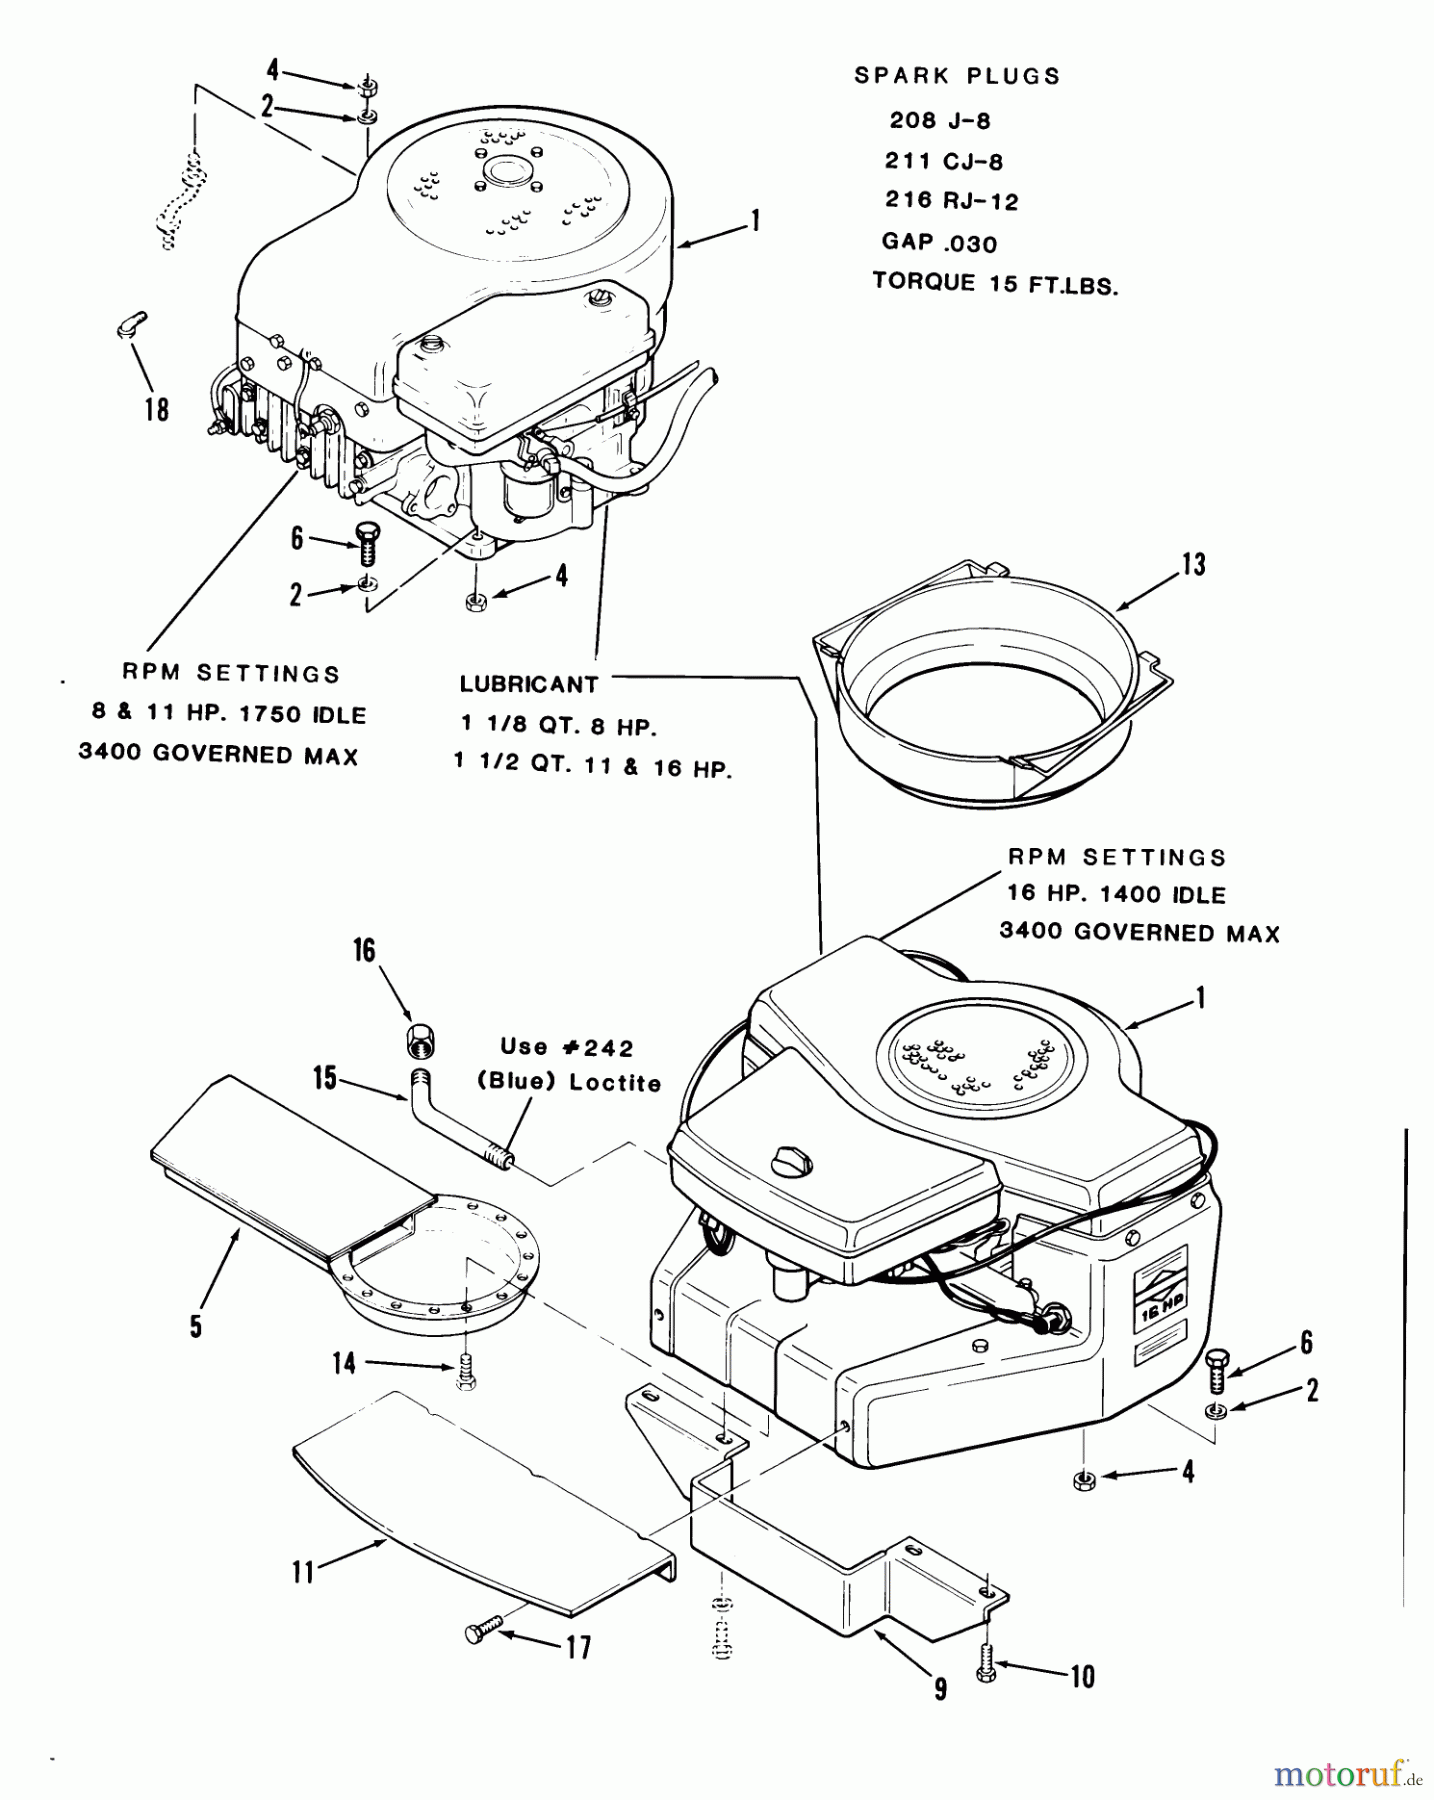  Toro Neu Mowers, Lawn & Garden Tractor Seite 1 22-11BE01 (211-A) - Toro 211-A Tractor, 1985 ENGINE